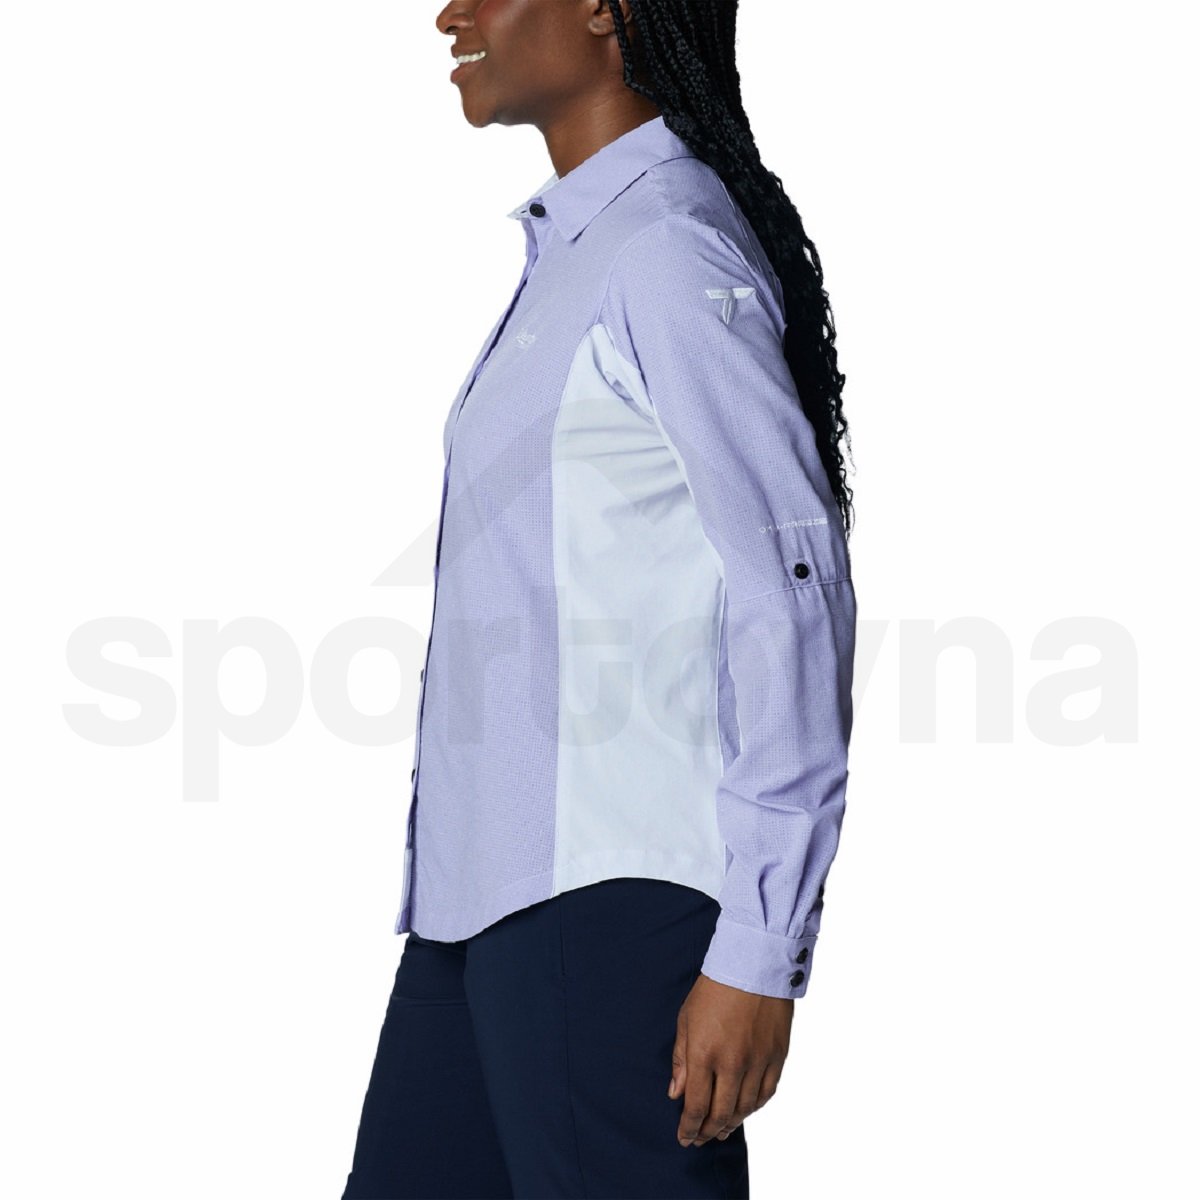 Košile Columbia Titan Pass™ Irico LS Shirt W - fialová